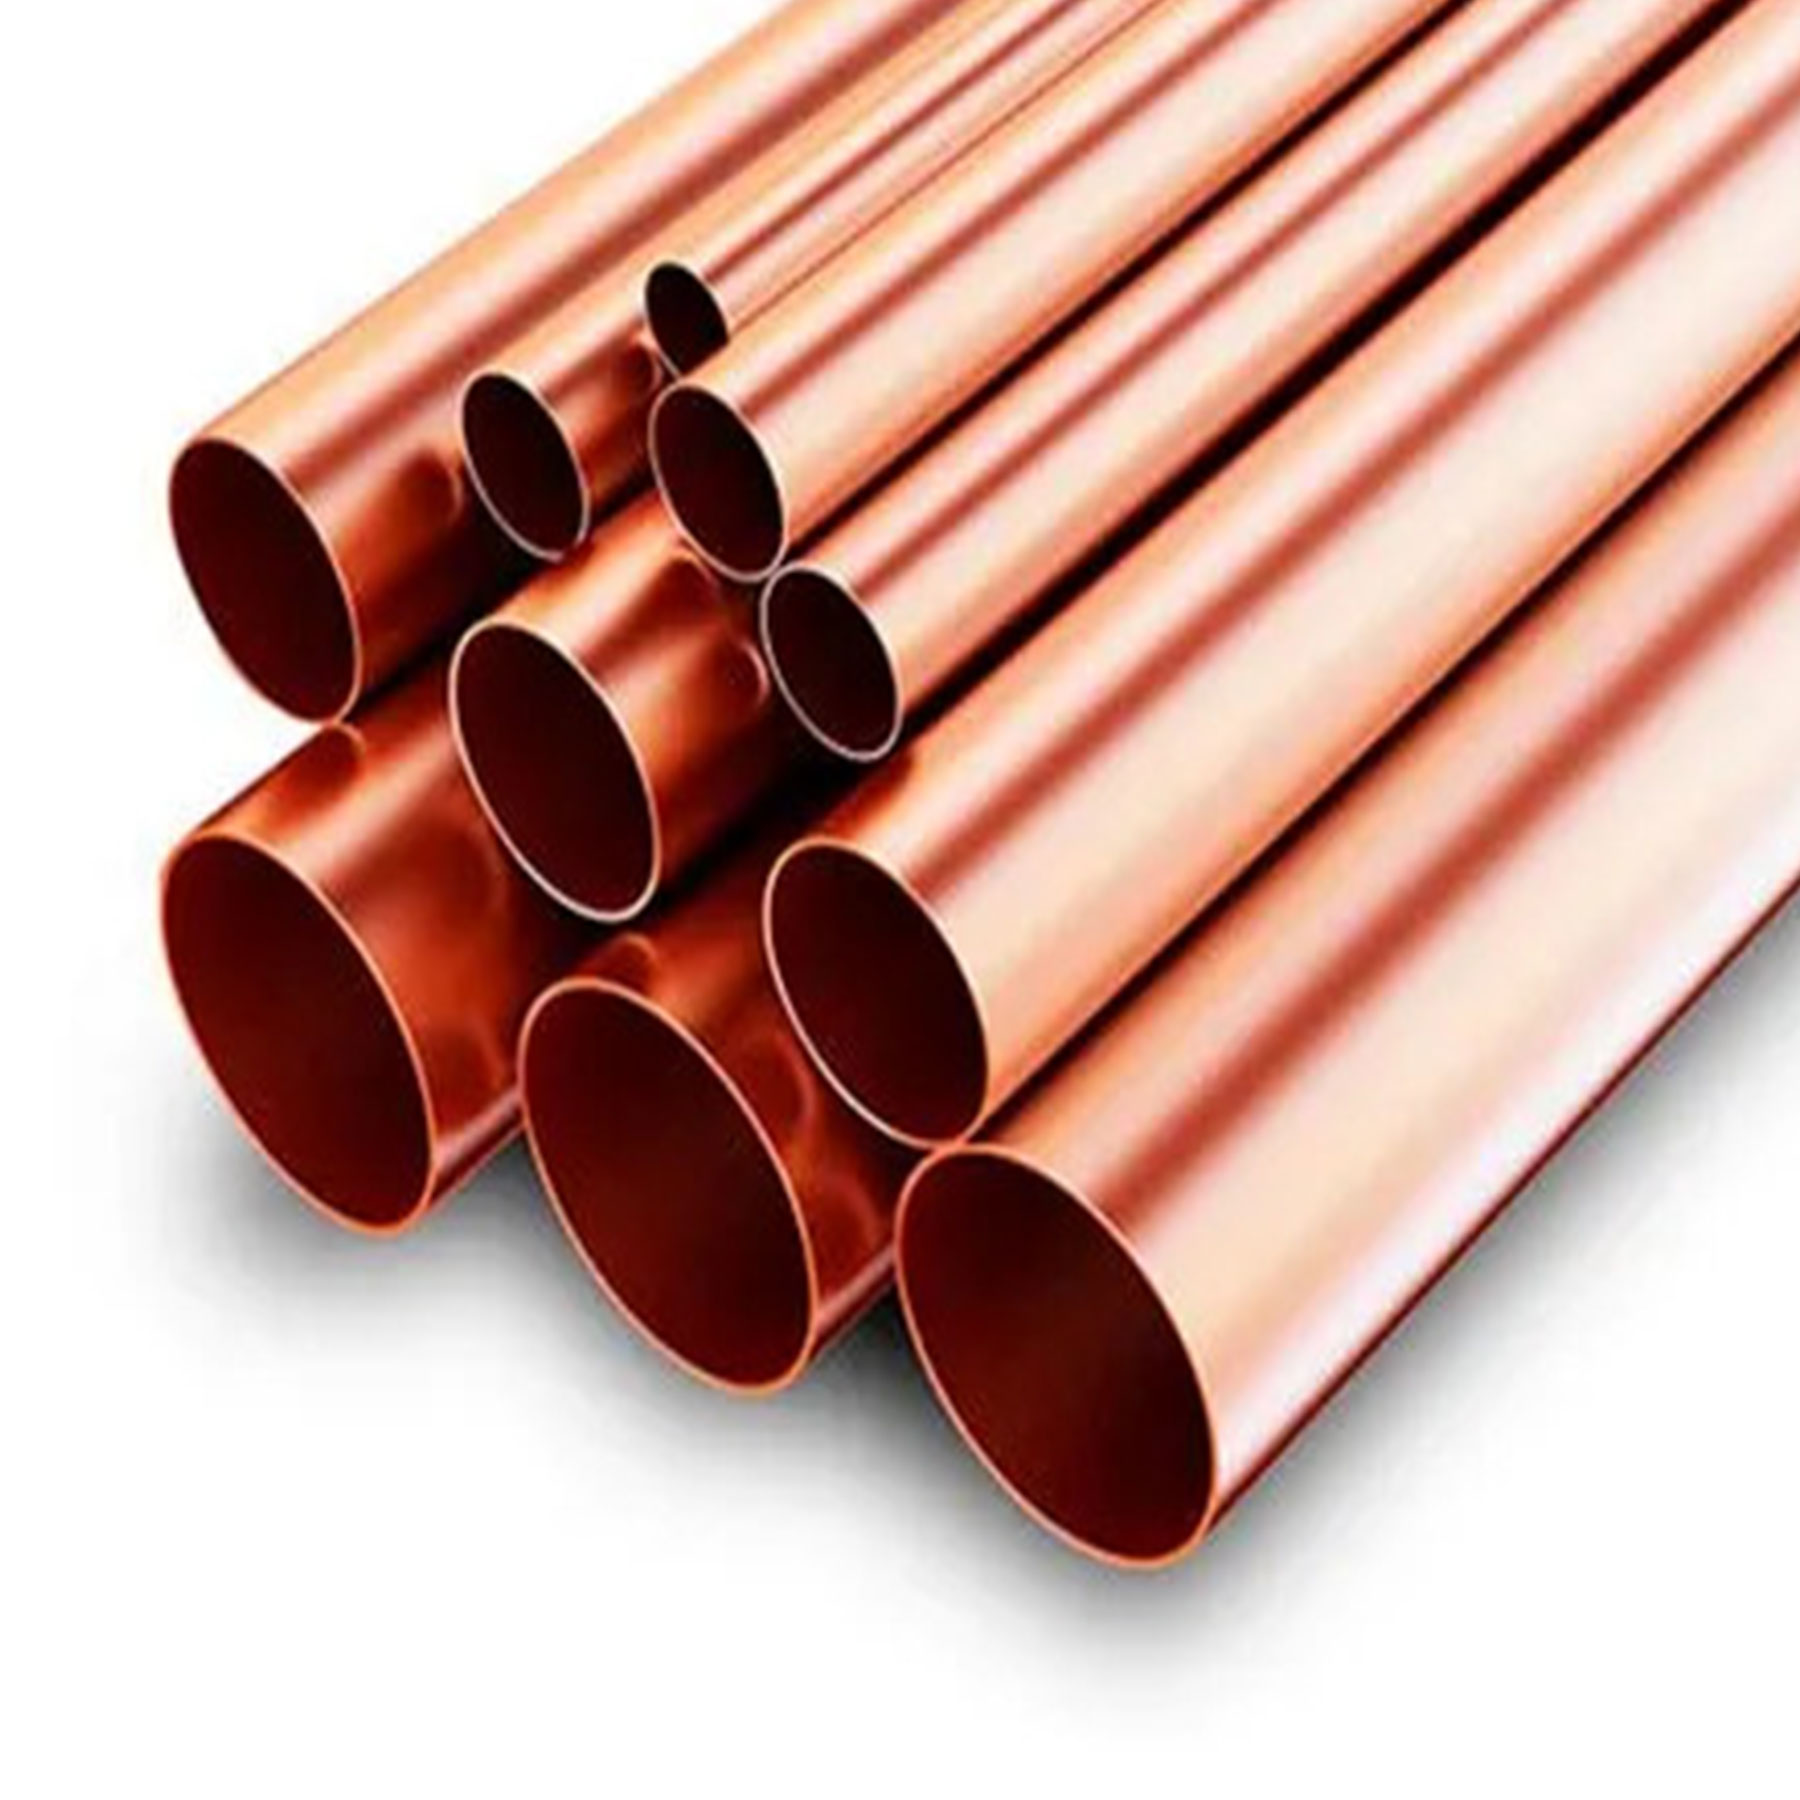 hvac-copper-pipes-qatar